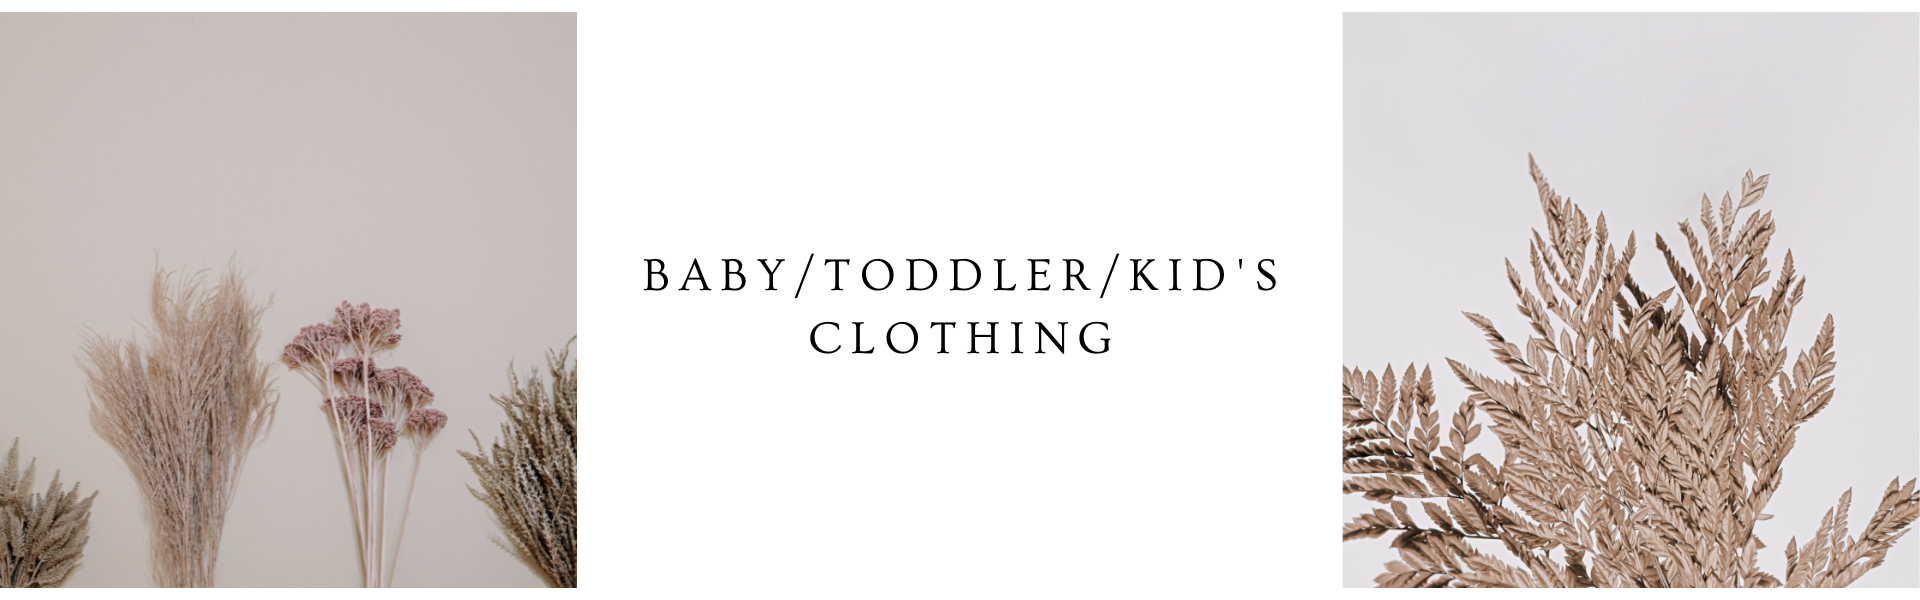 Baby/Toddler/Kid's Clothing